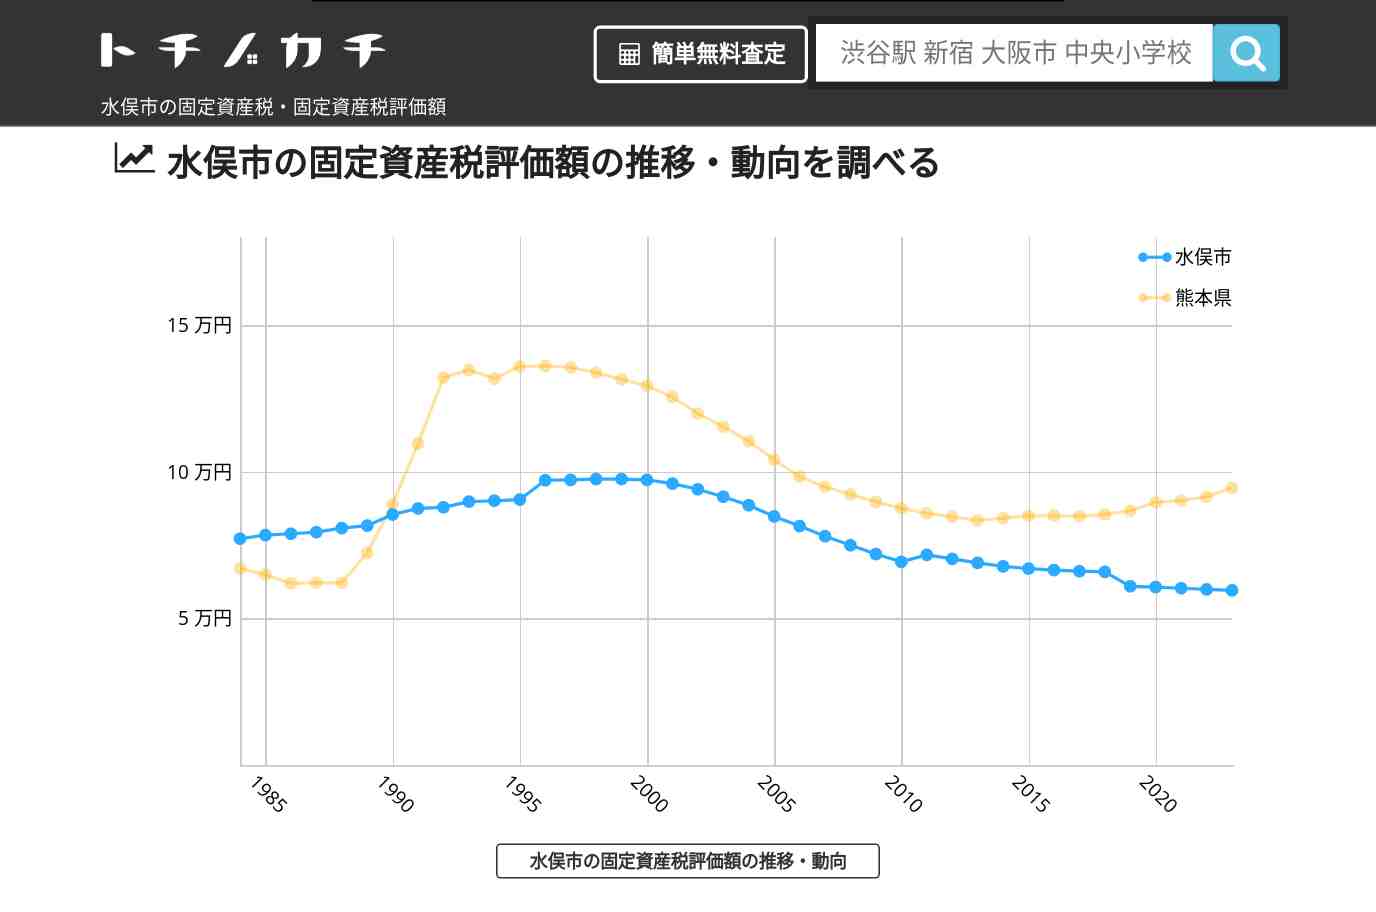 袋小学校(熊本県 水俣市)周辺の固定資産税・固定資産税評価額 | トチノカチ